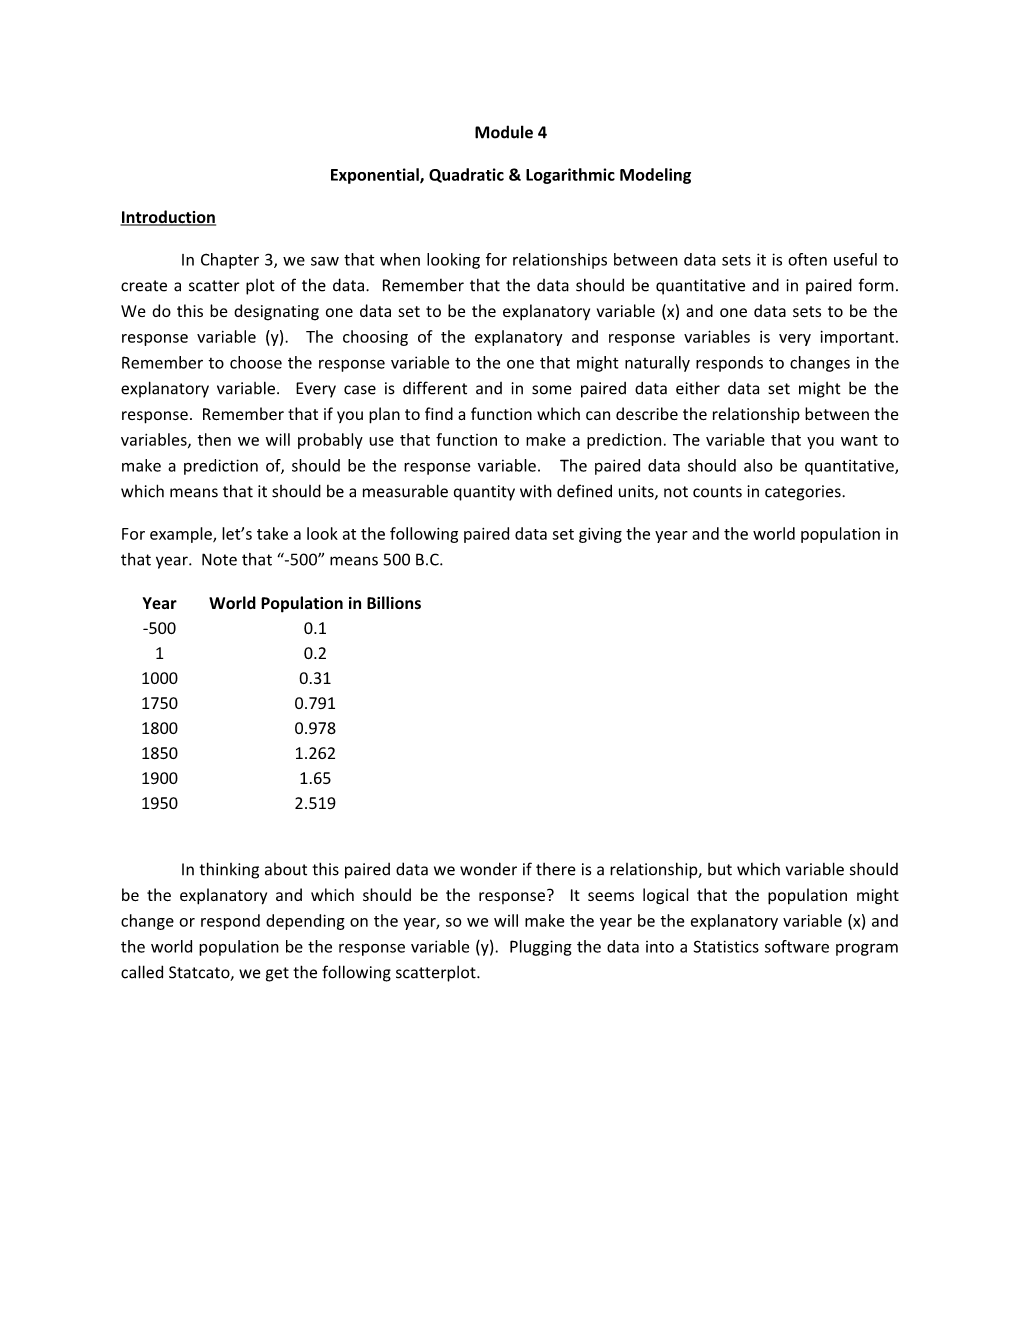 Exponential, Quadratic & Logarithmic Modeling